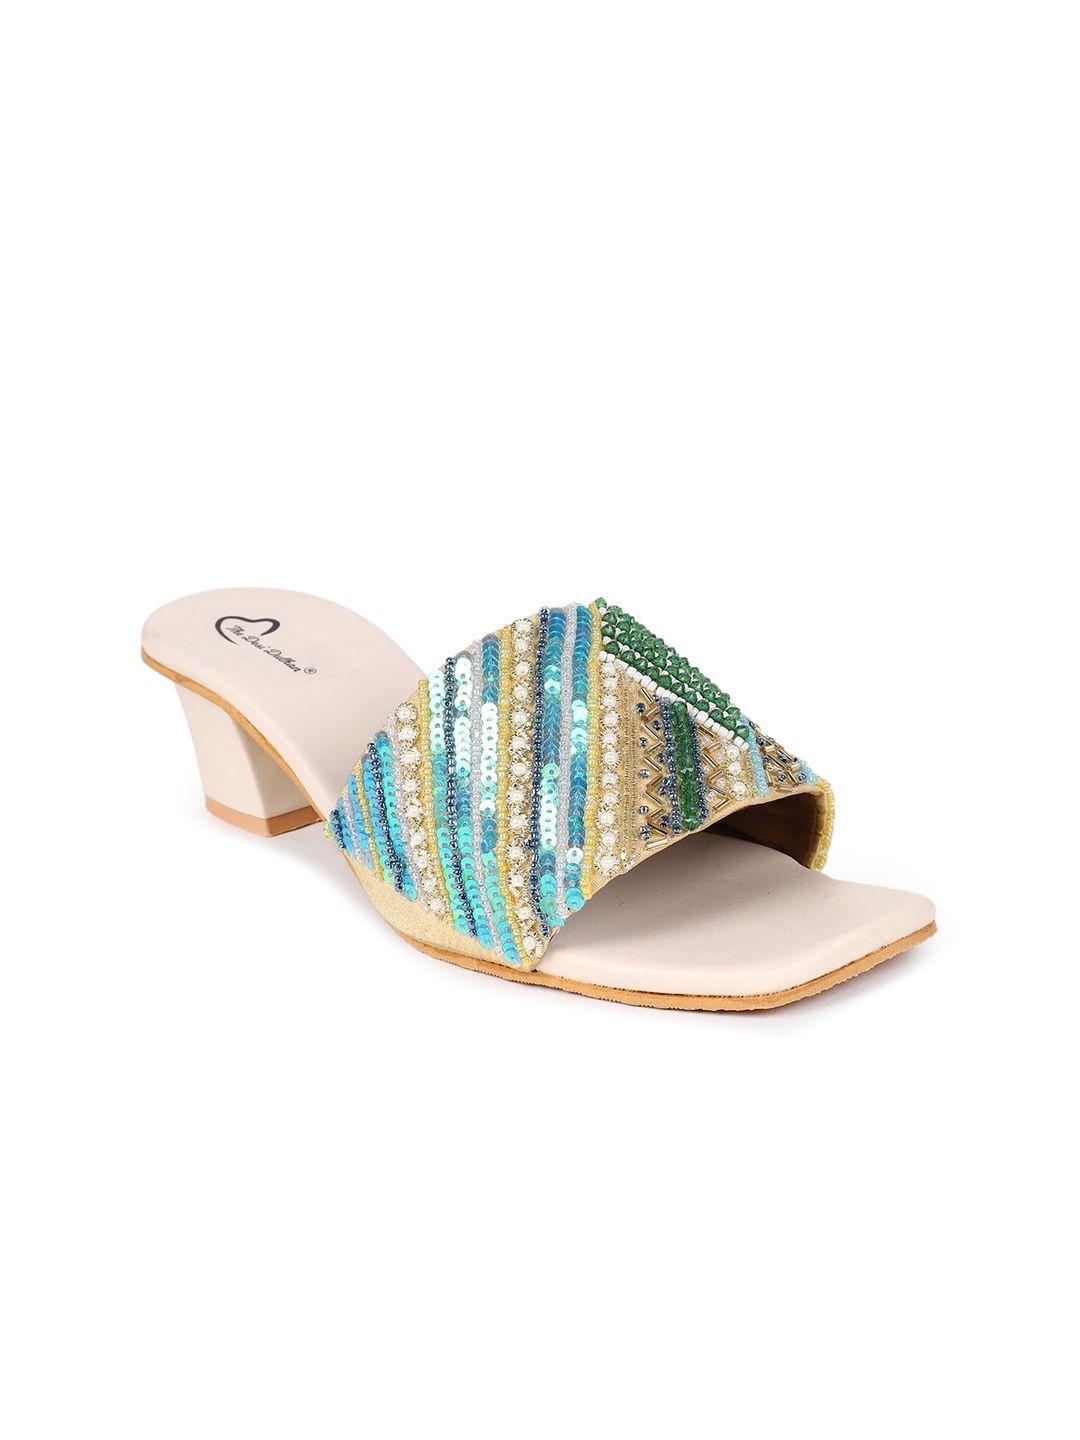 the desi dulhan embellished ethnic block heels